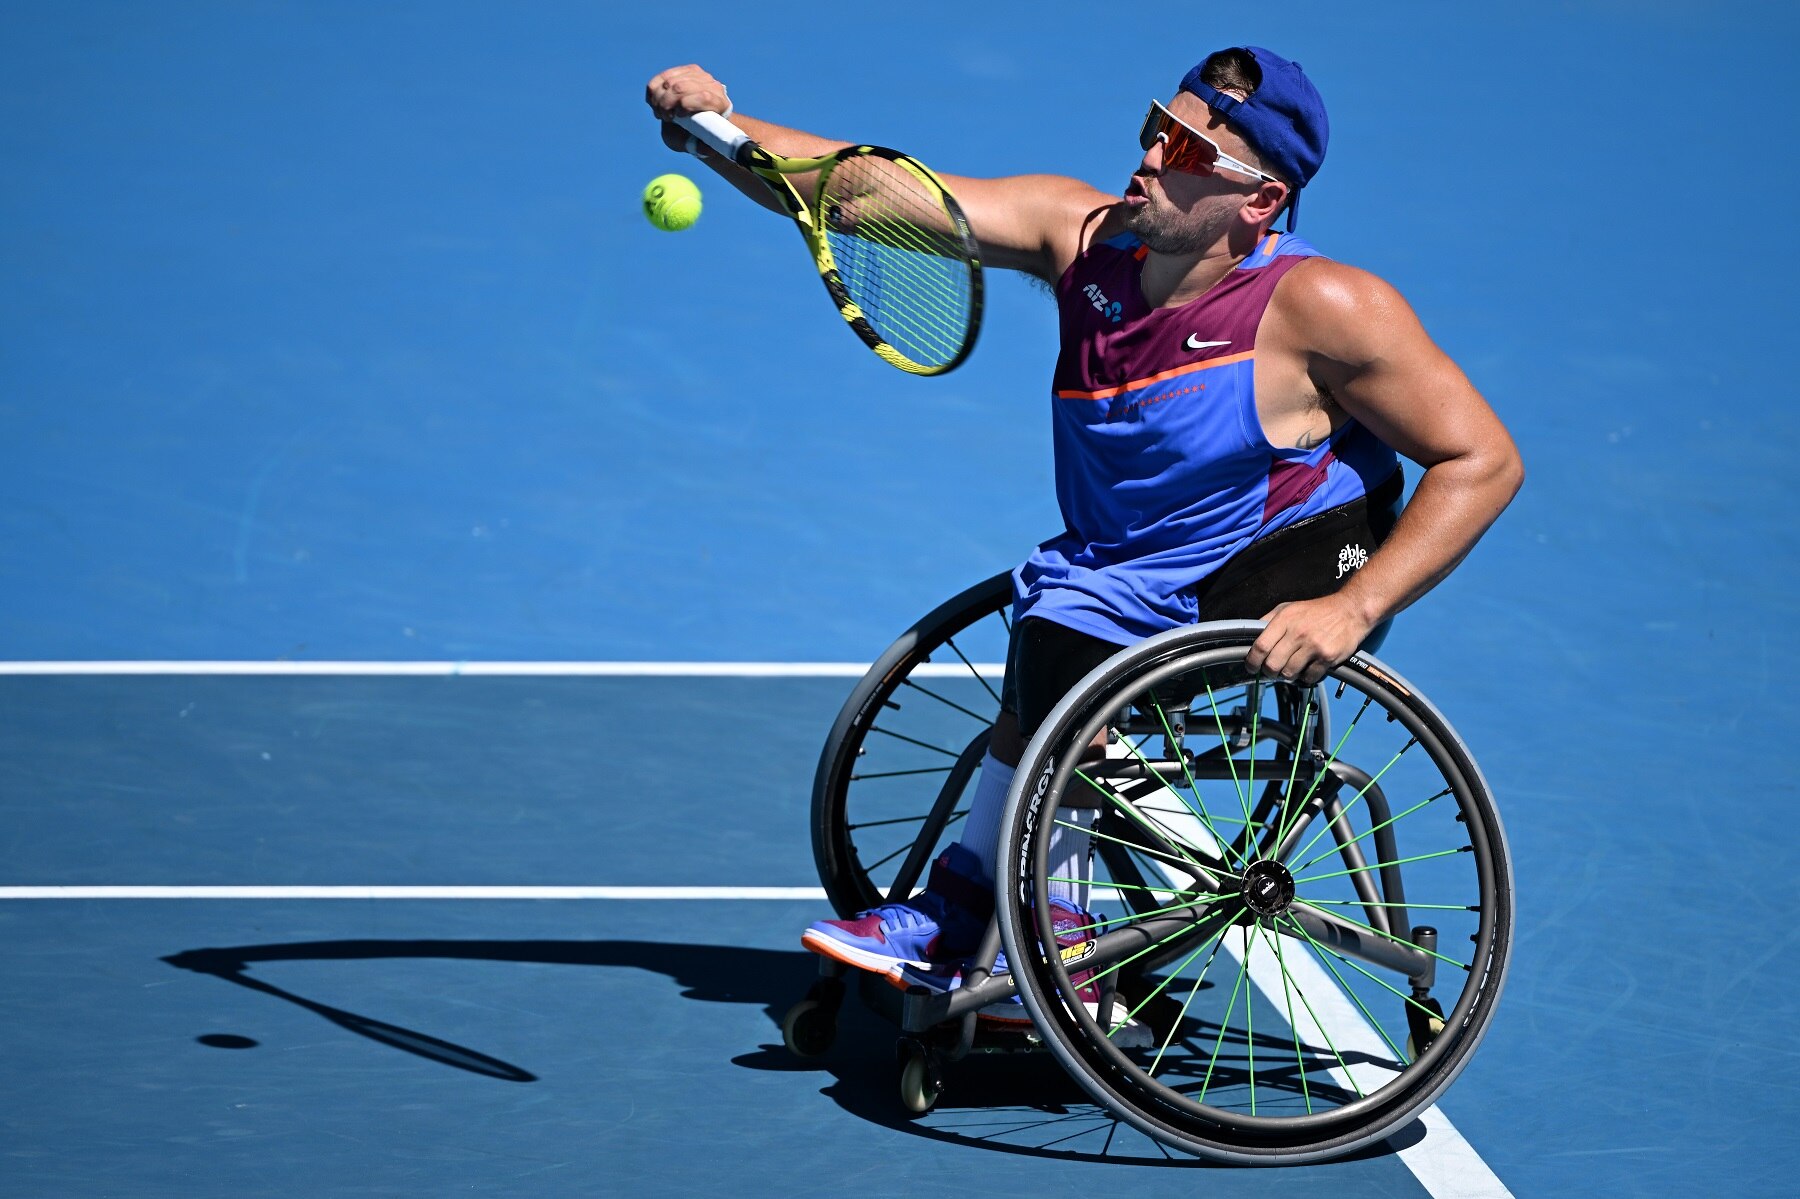 Dylan Alcott of Australia during his mens quad wheelchair singles semi final match